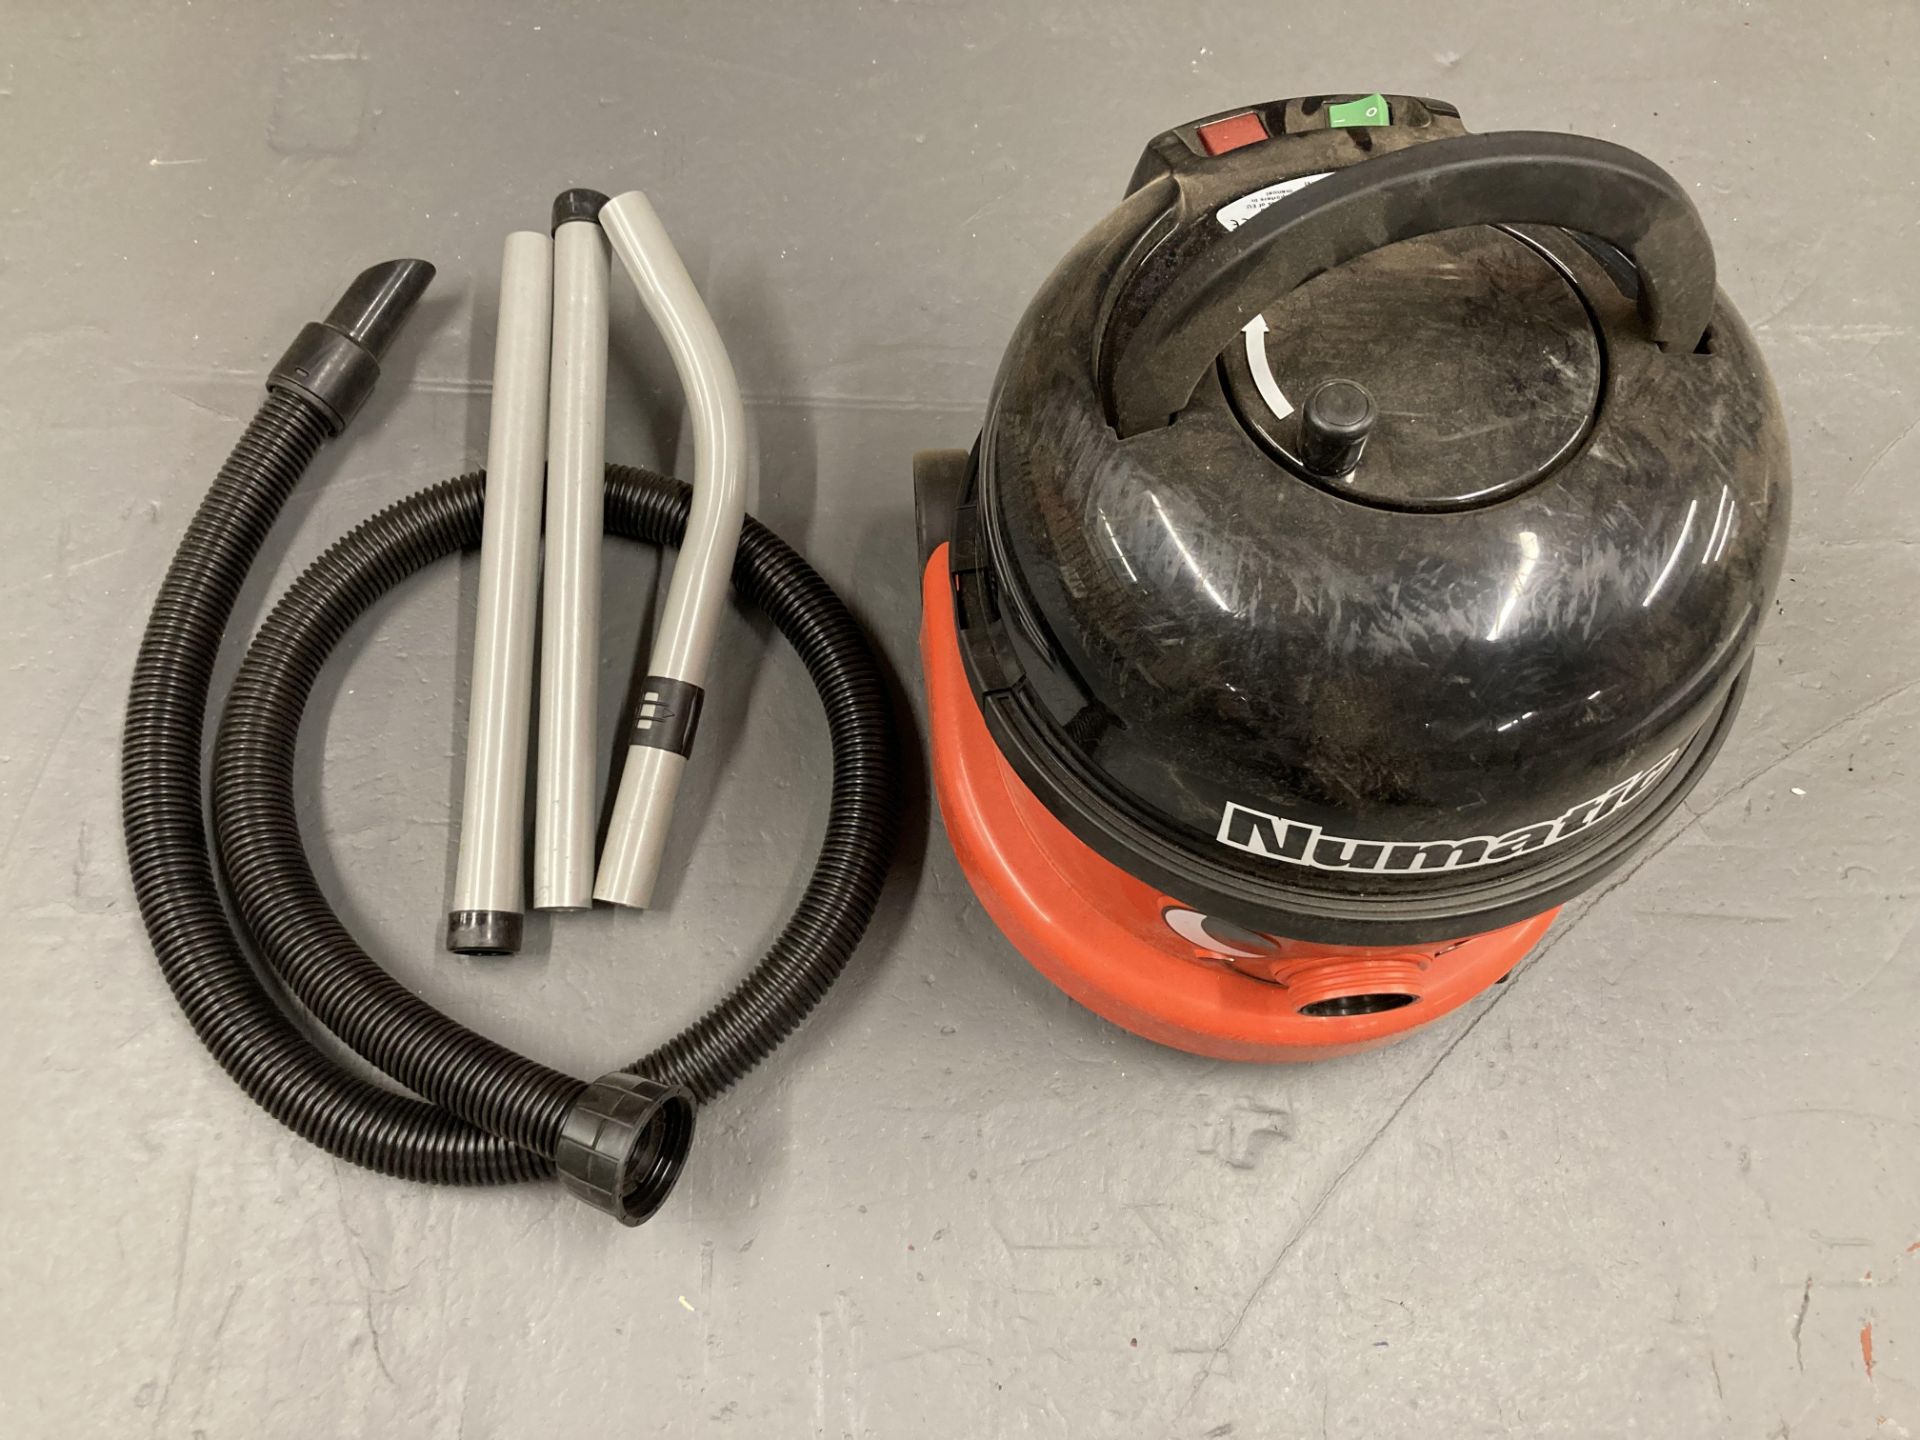 A Numatic vacuum with hose.